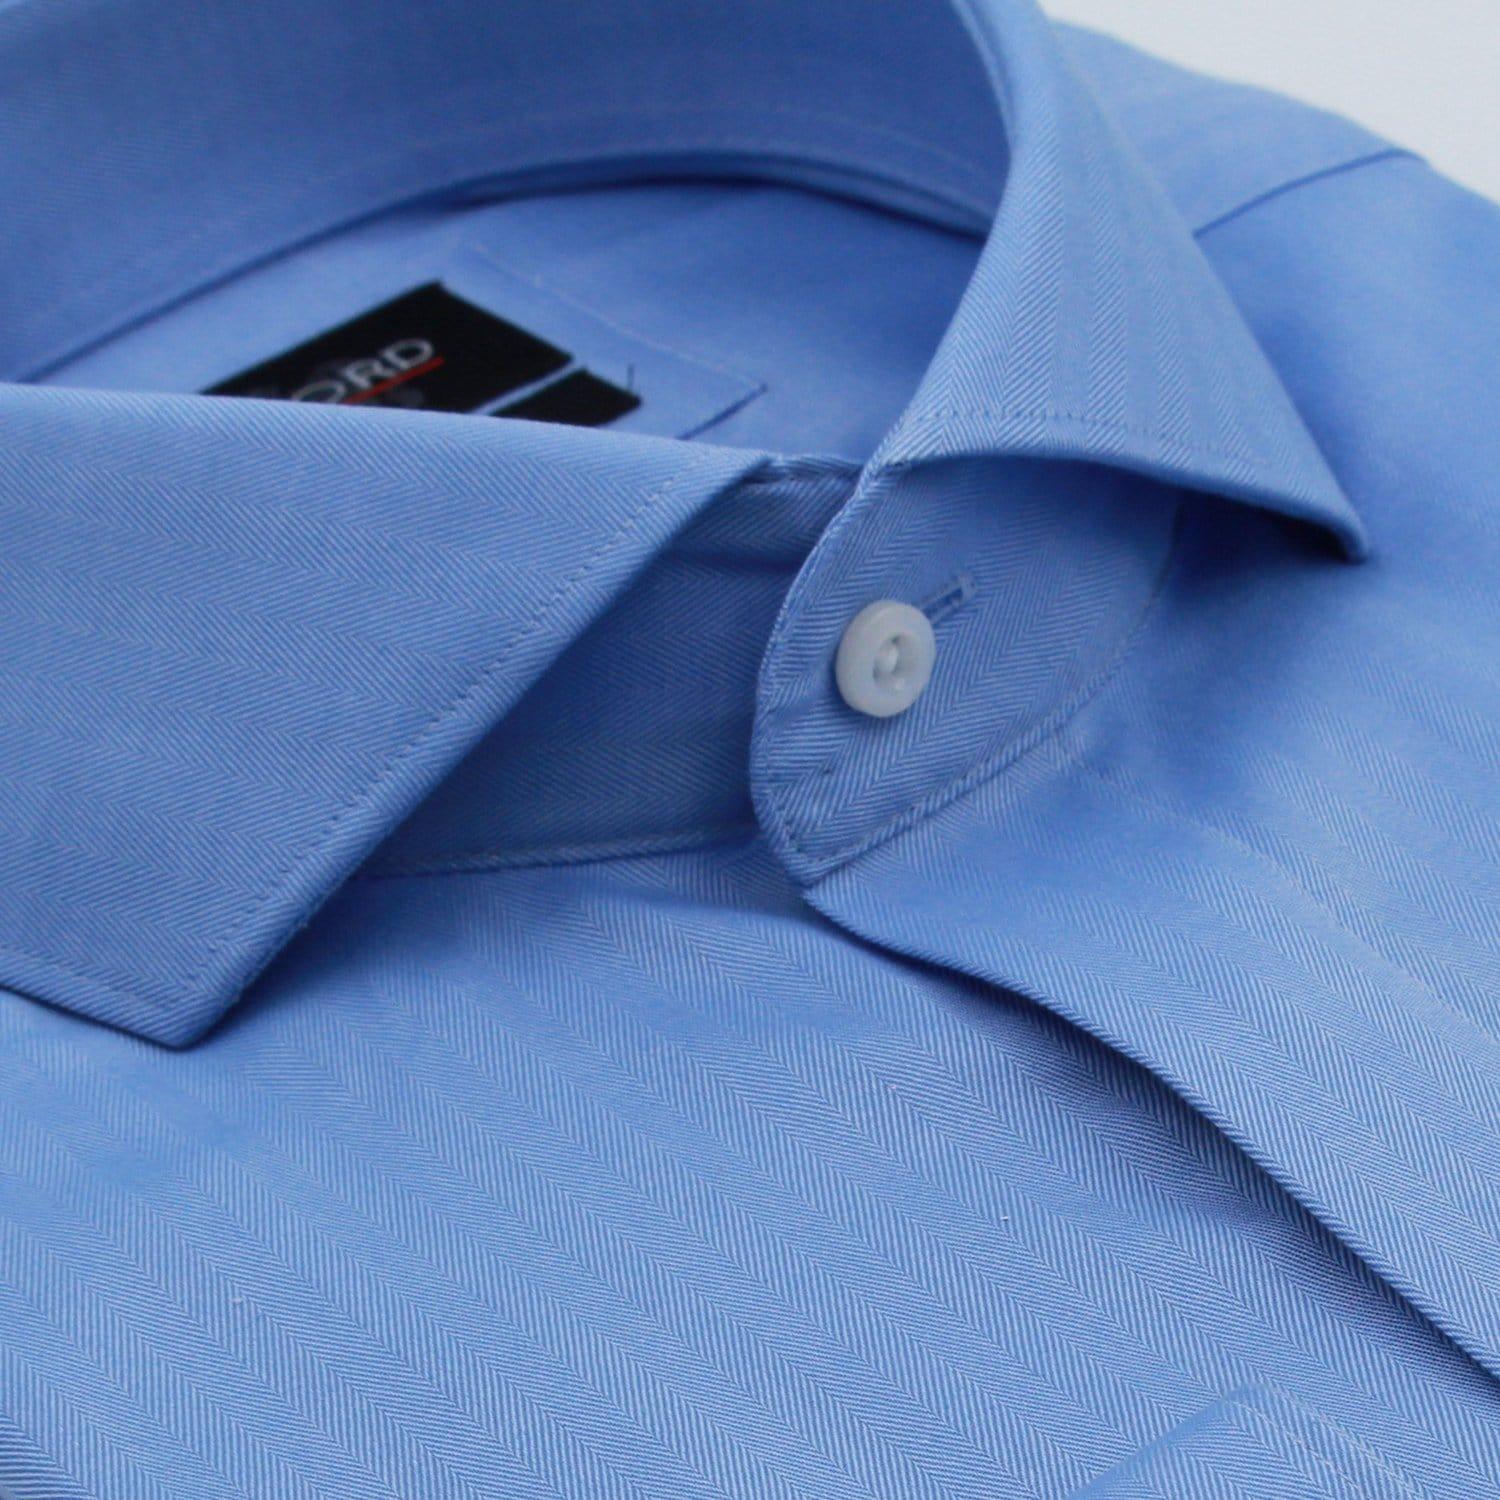 FOCIL Black & Sky Blue Formal Wear Combo Shirt for Men's (Pack of